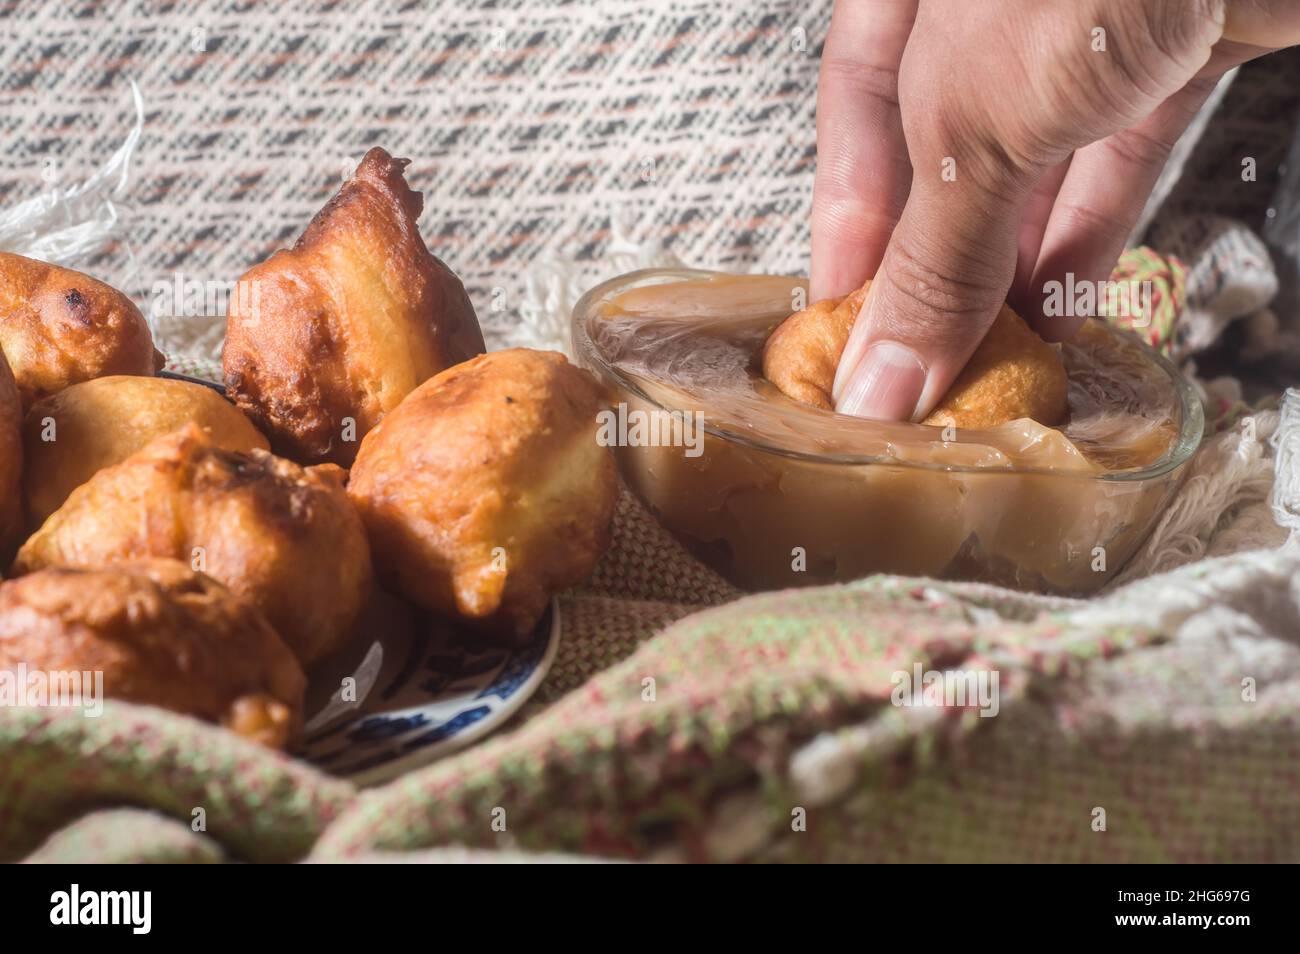 brazilian sweet called 'bolinho de chuva' rain dumpling, or Fritter, in a natural home environment copy space and hands holding a dumpling Stock Photo